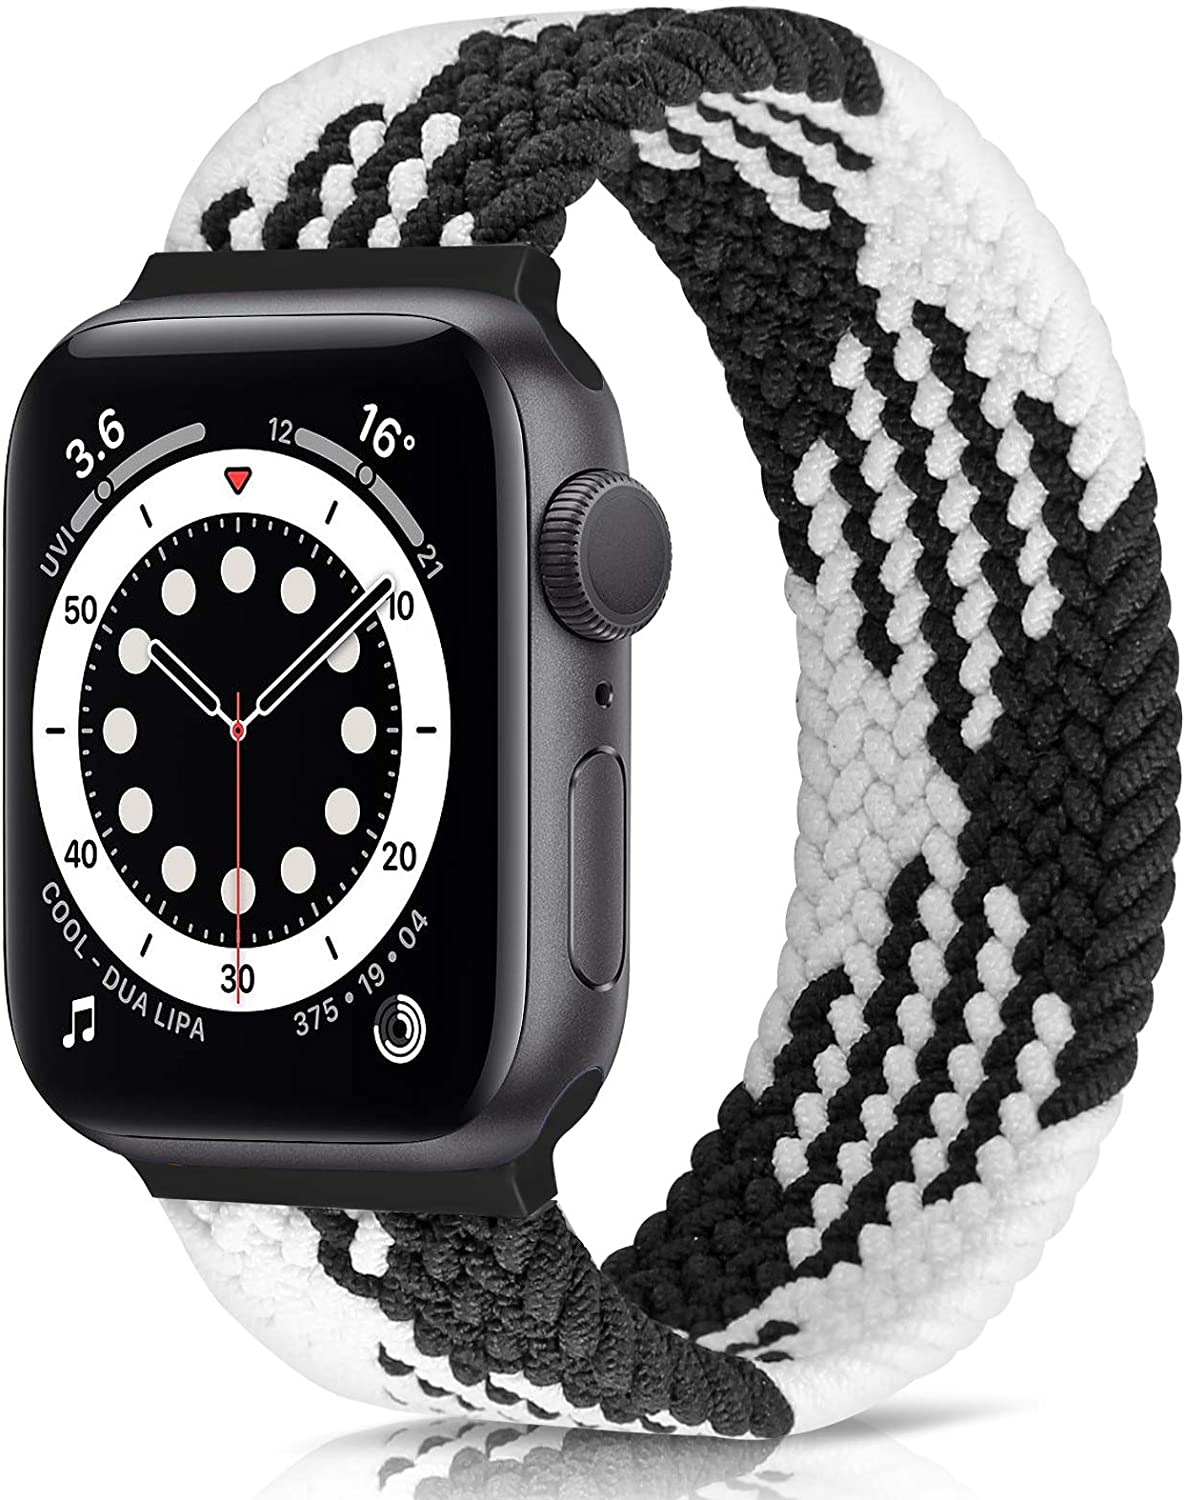 Řemínek iMore Braided Solo Loop Apple Watch Series 1/2/3 38mm - zebra (L)